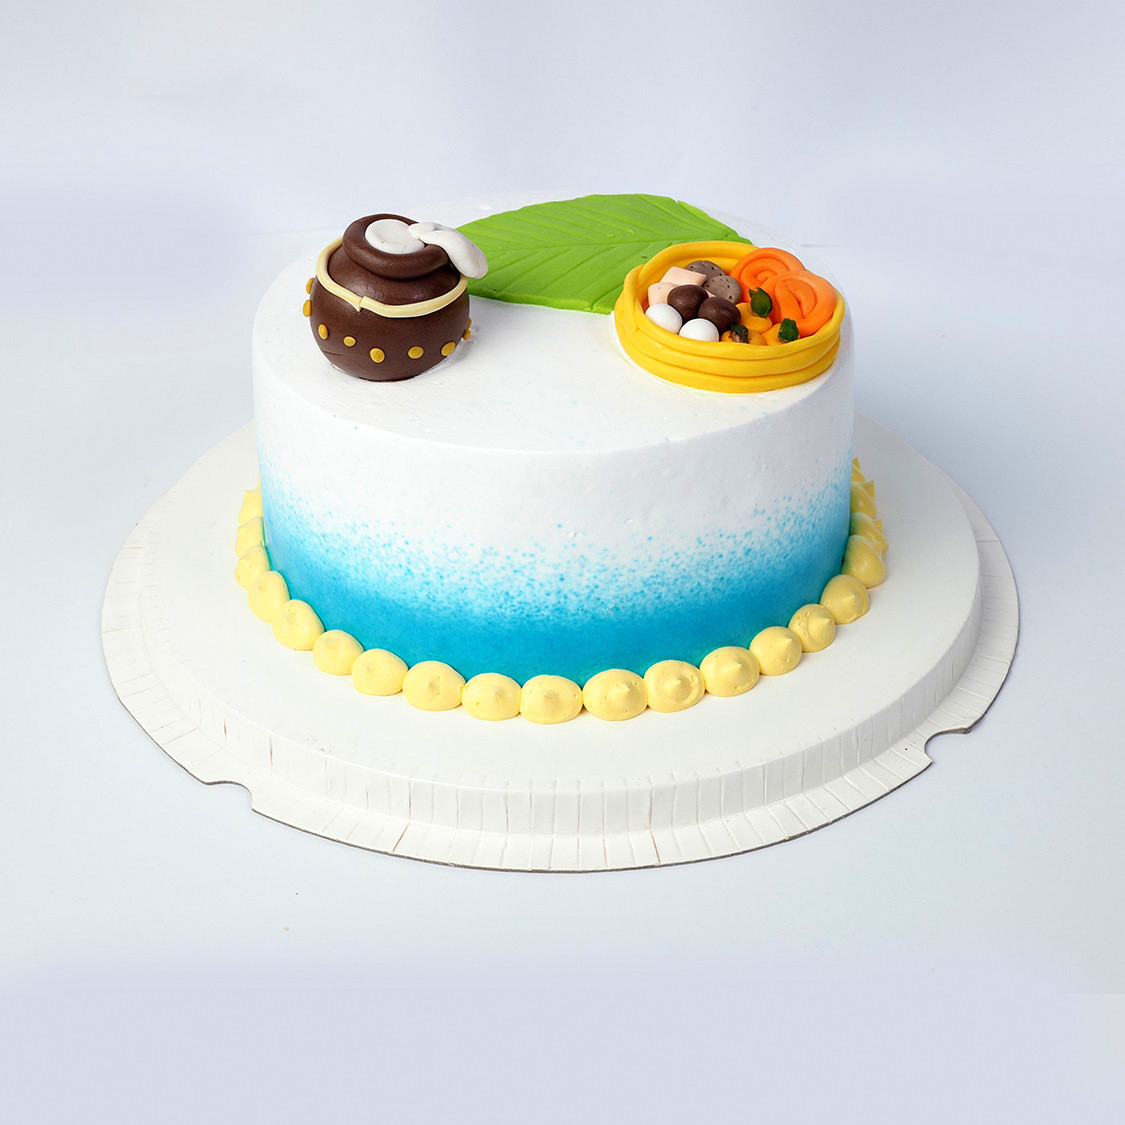 Janmashtami theme Matka cake 2 k.g Vanilla